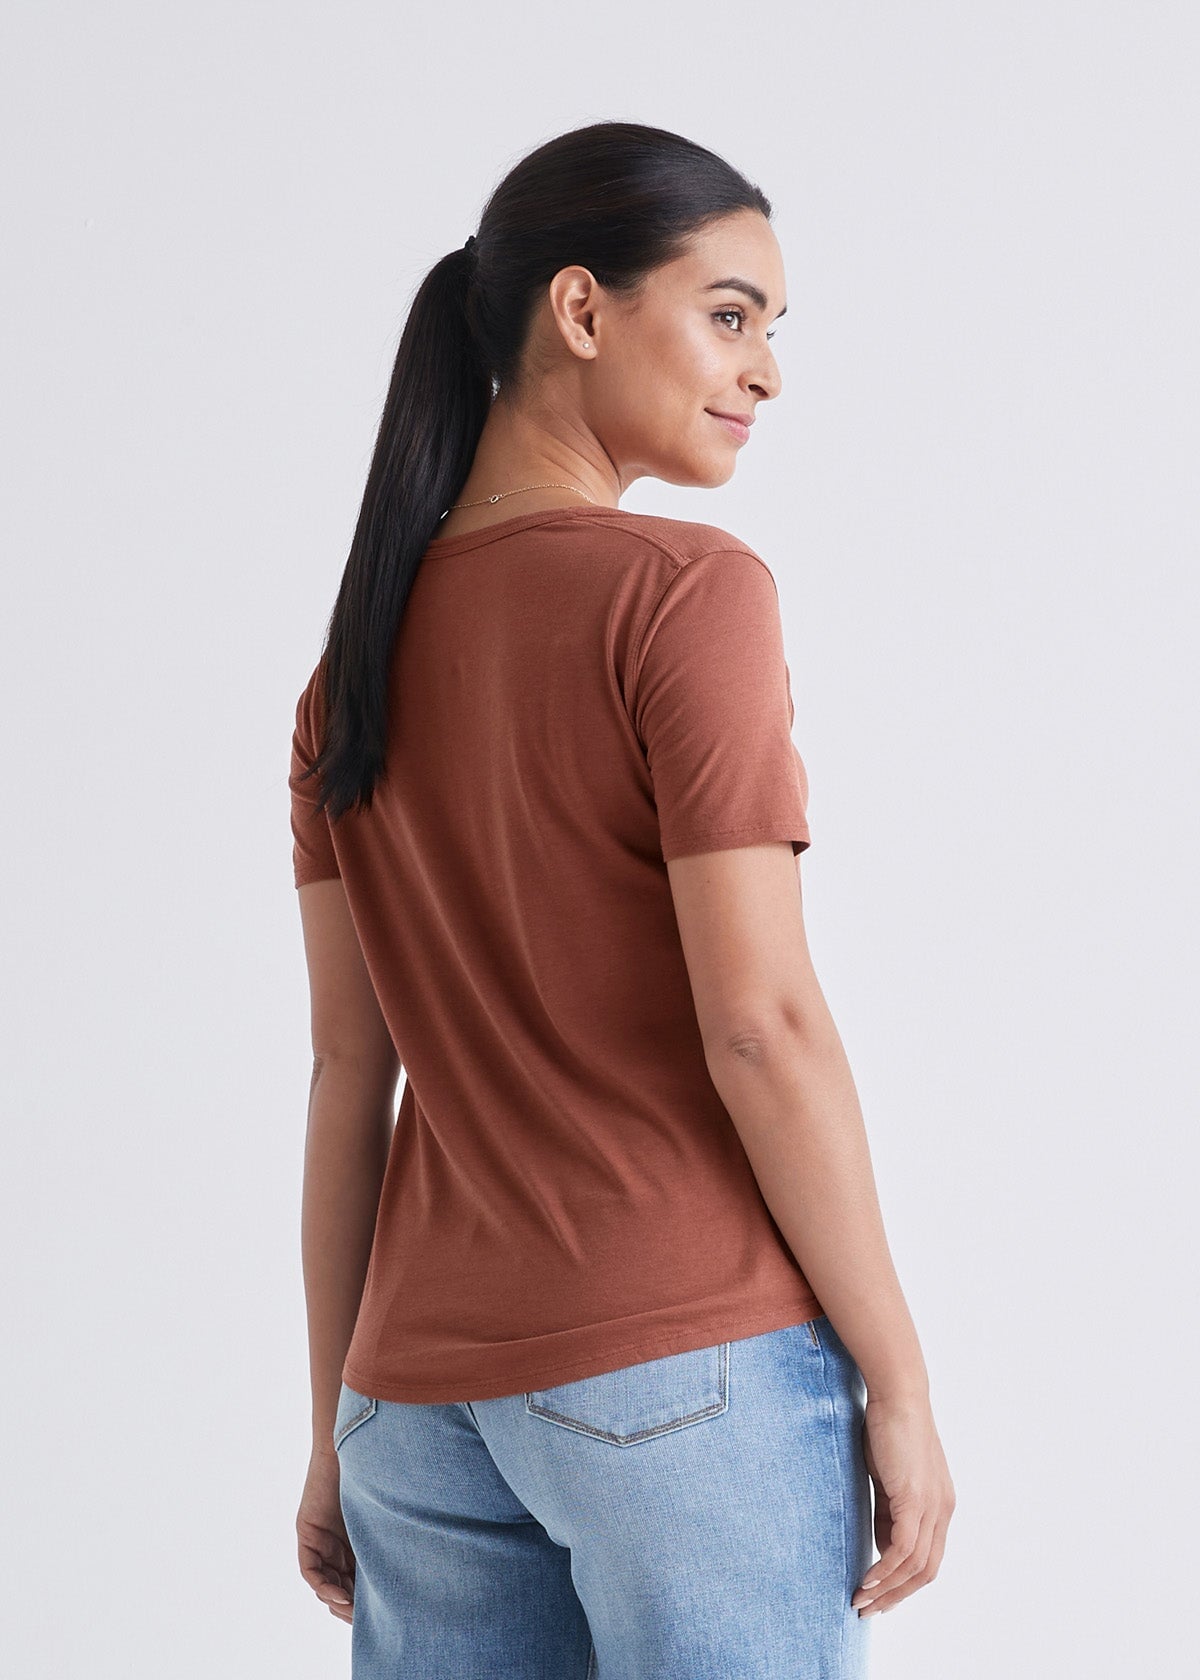 womens soft lightweight reddish-brown v-neck t-shirt back